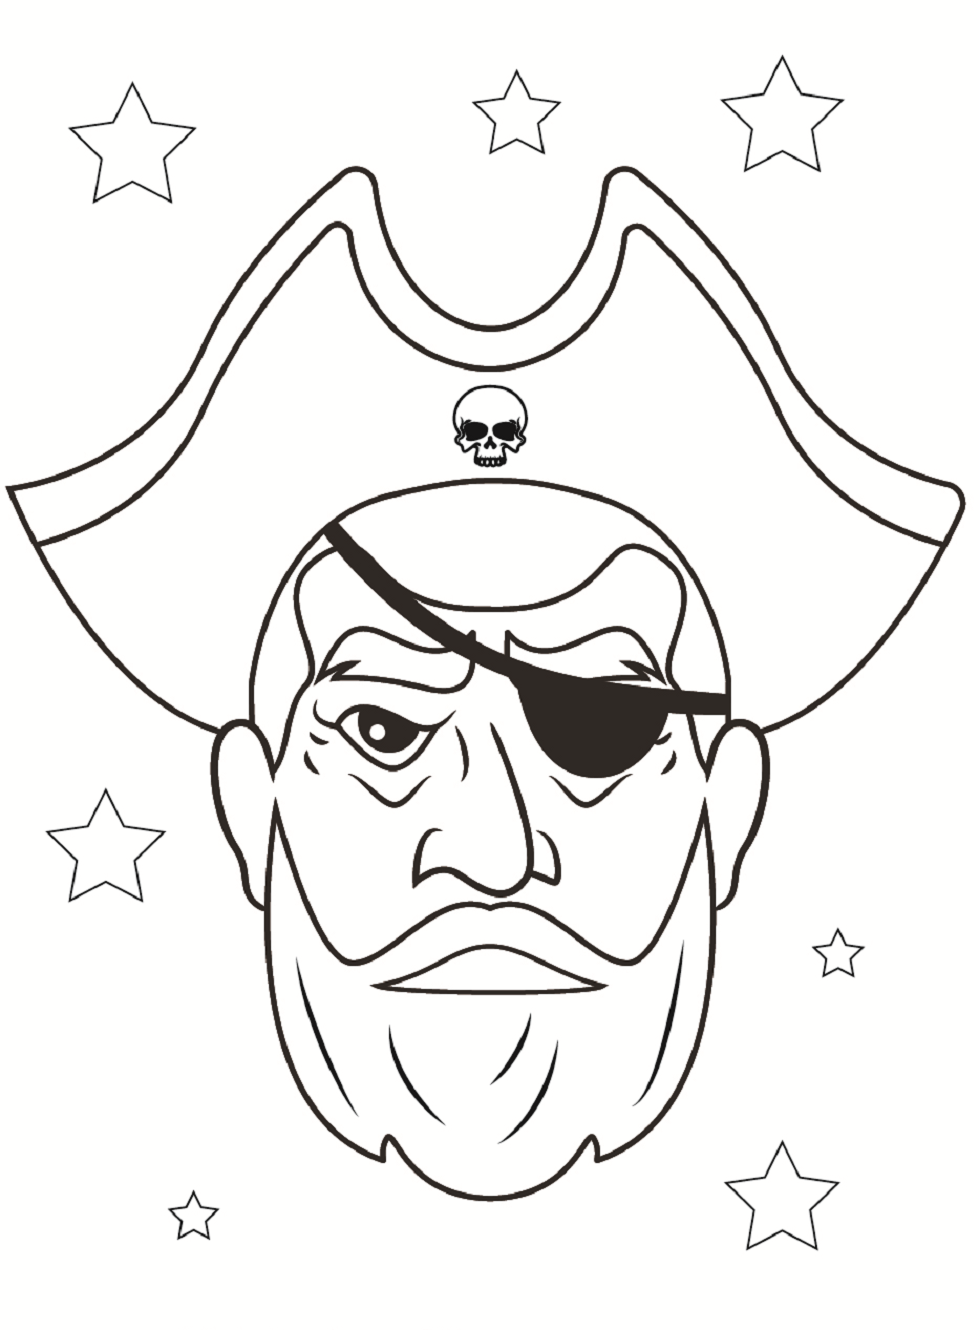 Cartoon Pirate Face Coloring Page (one-eye) - SheetalColor.com